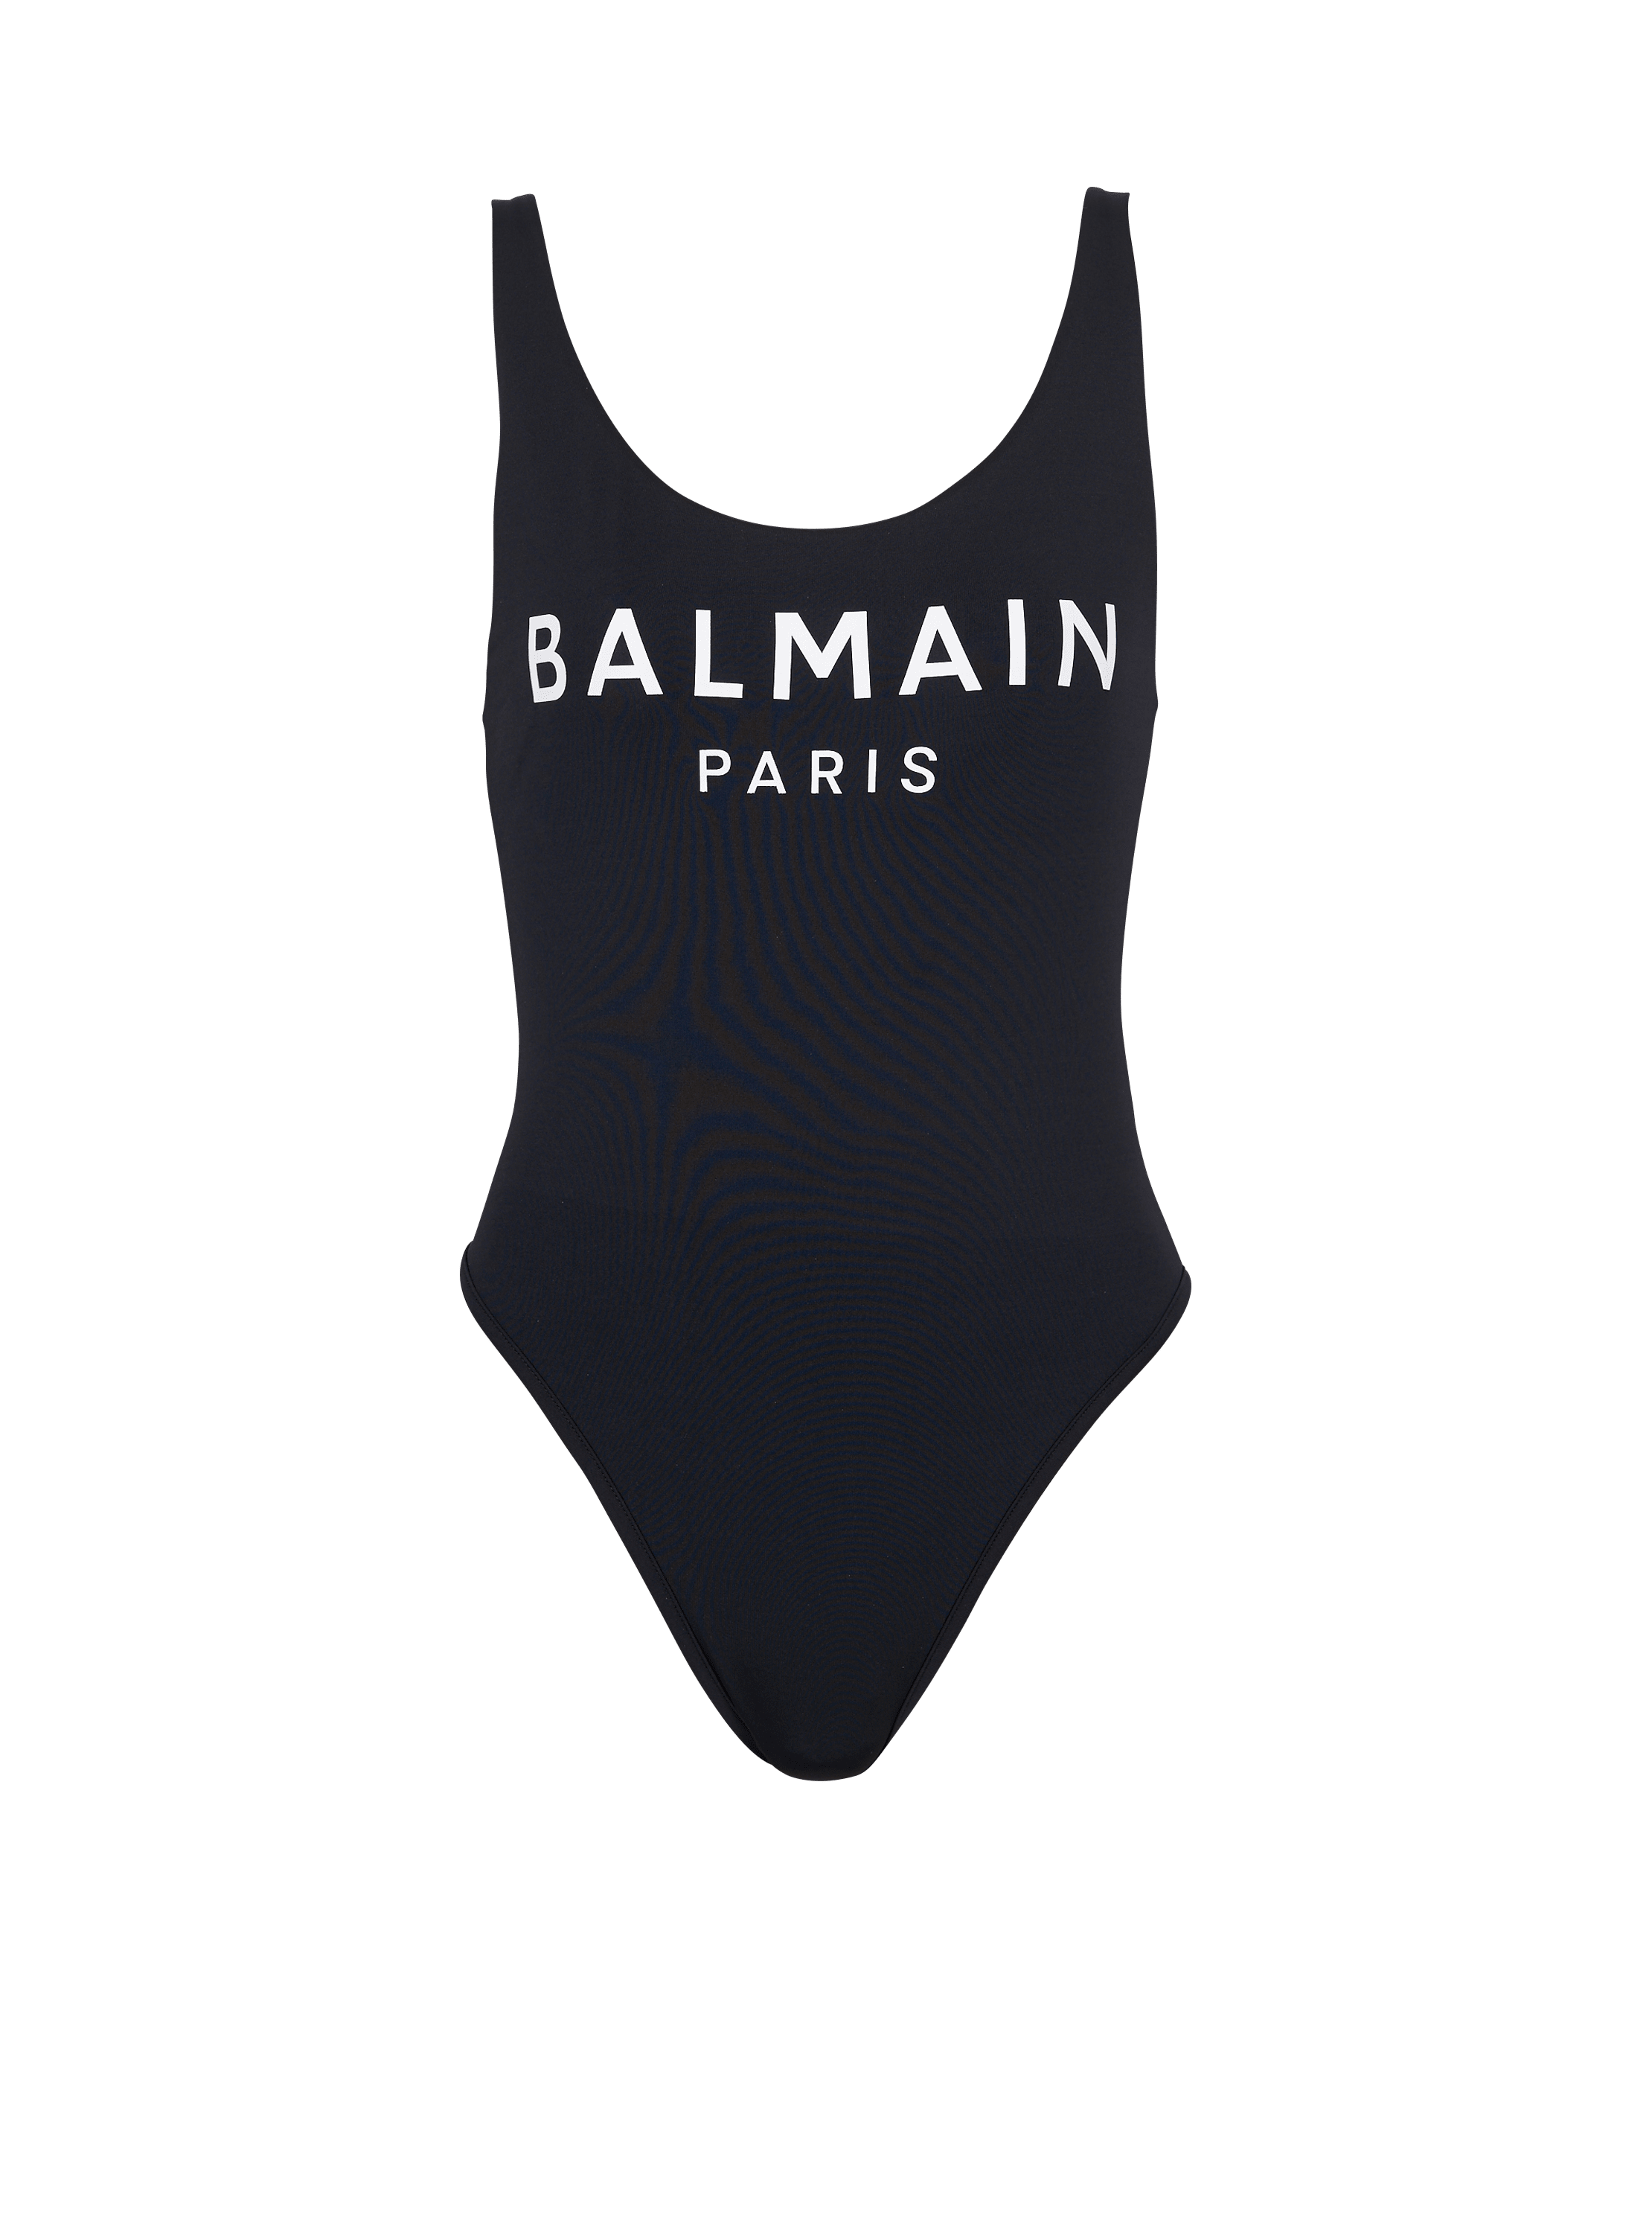 Balmain Paris swimsuit